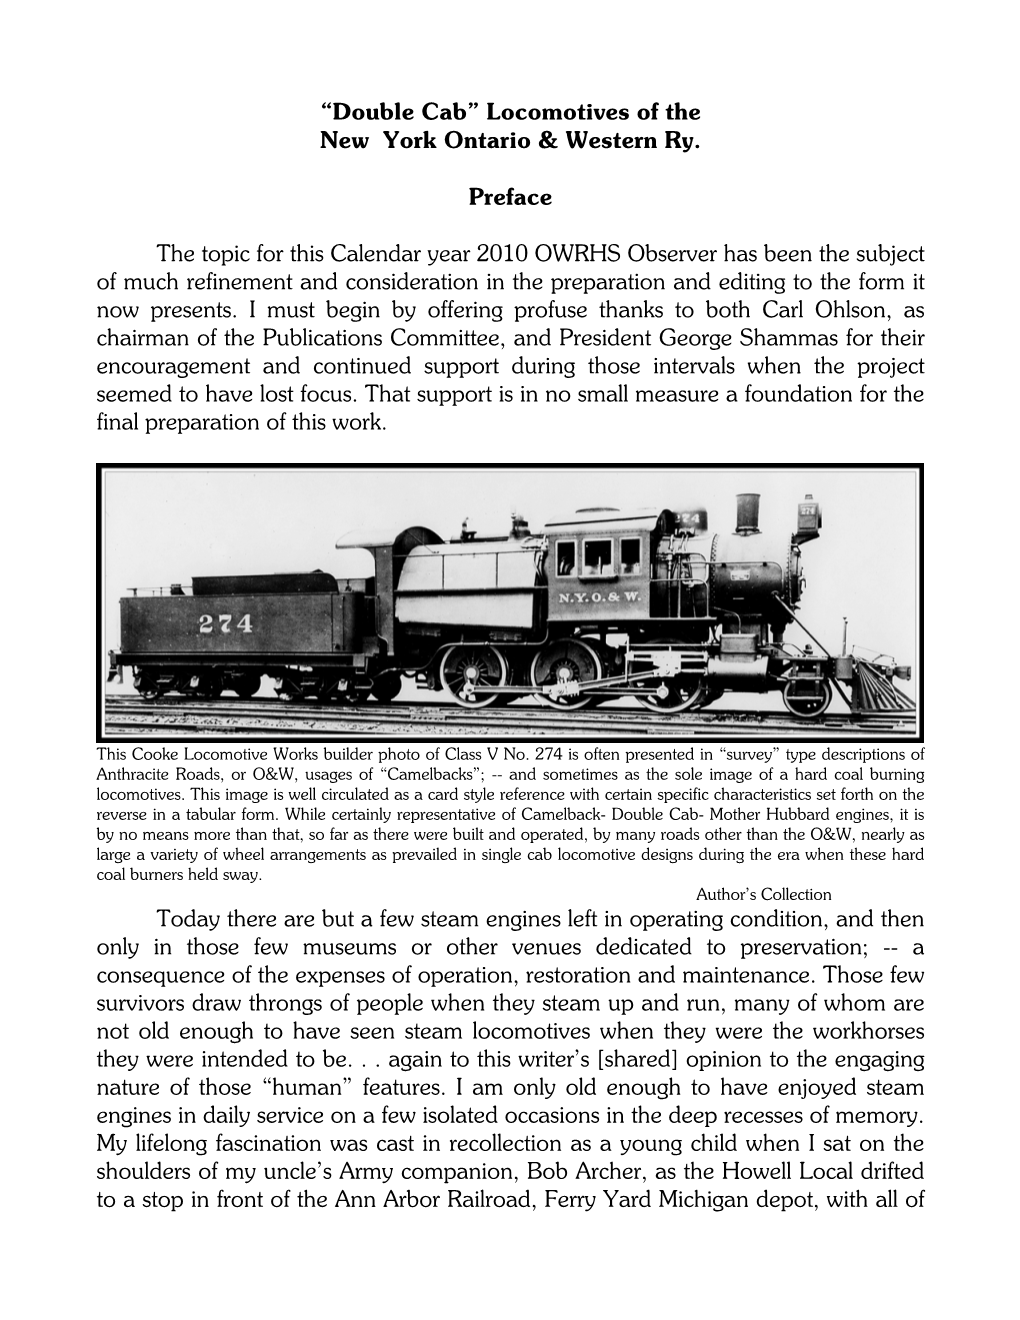 “Double Cab” Locomotives of the New York Ontario & Western Ry